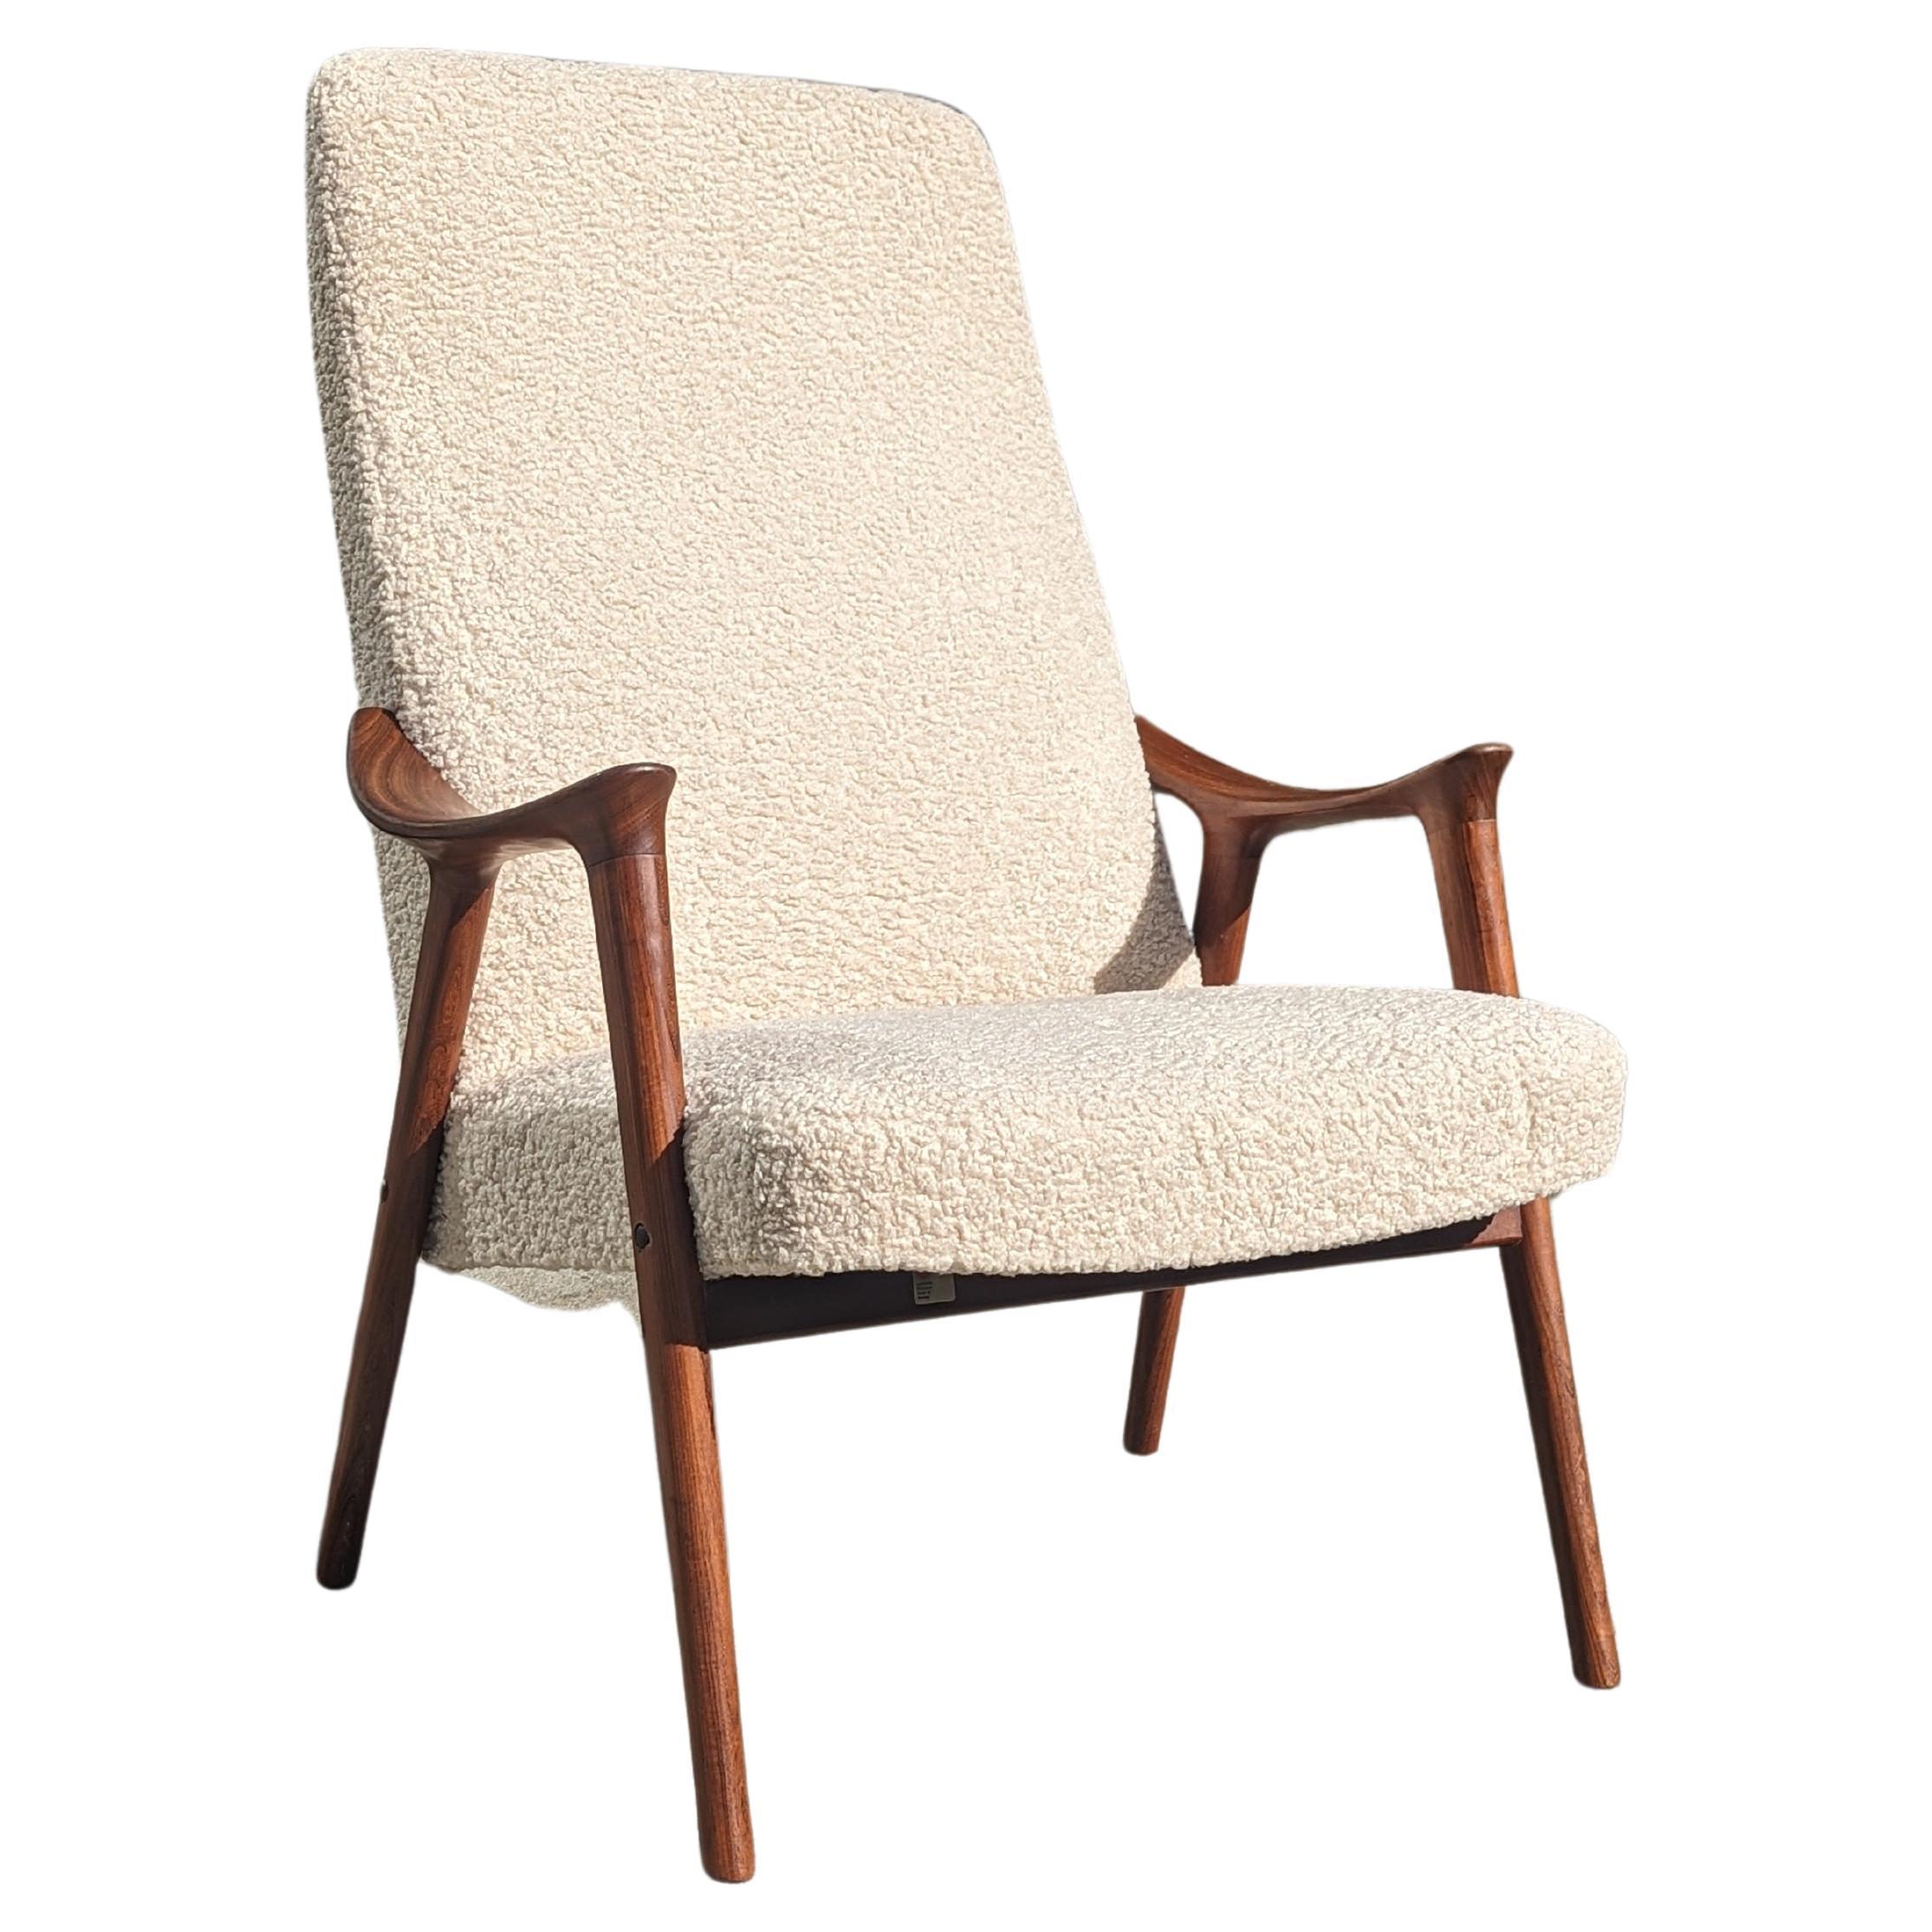  The 1960s Westnofa Scoop Lounge Chair, a Danish Design Dream 